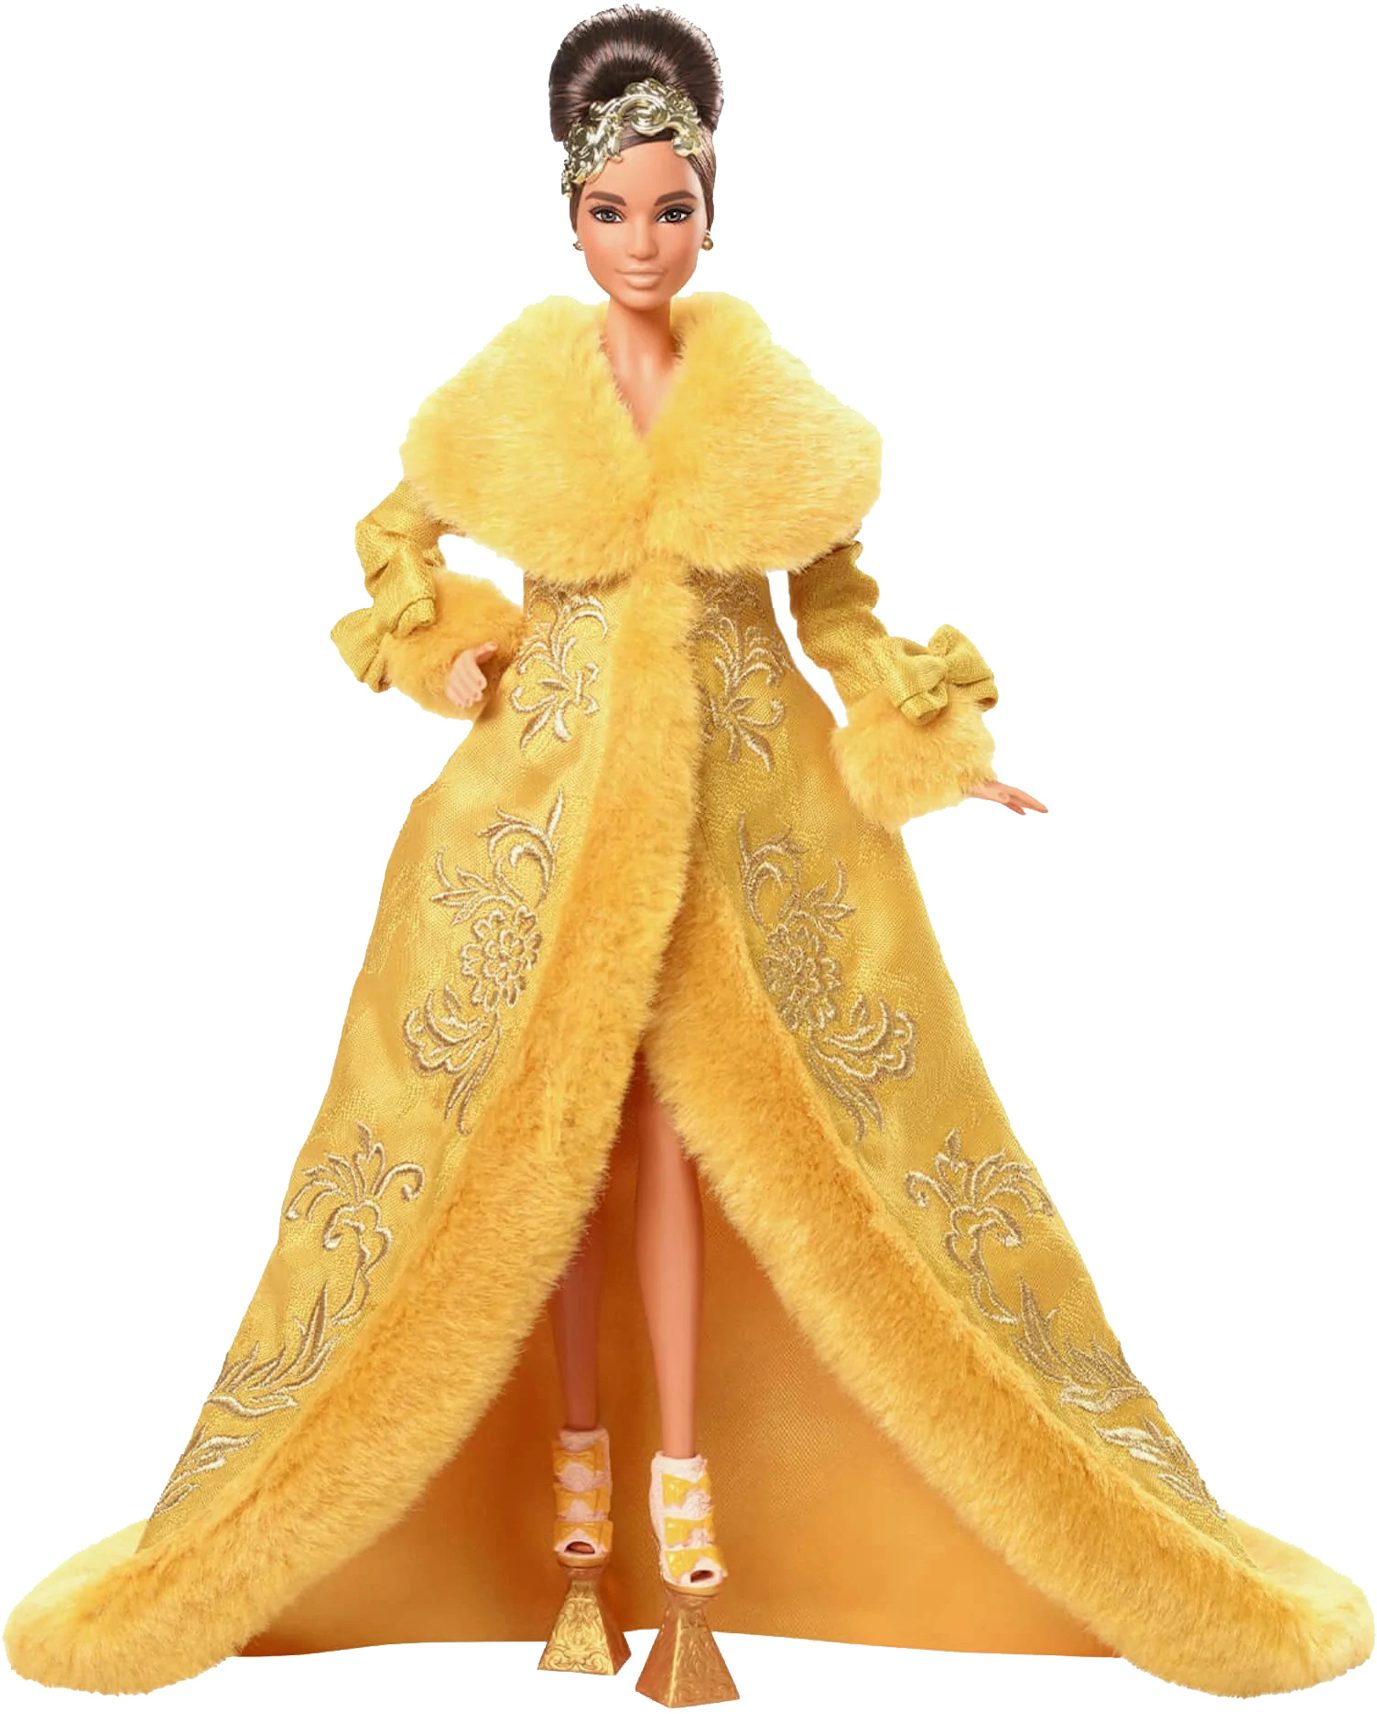 Louis Vuitton  Barbie accessories, Beautiful barbie dolls, Fashion dolls